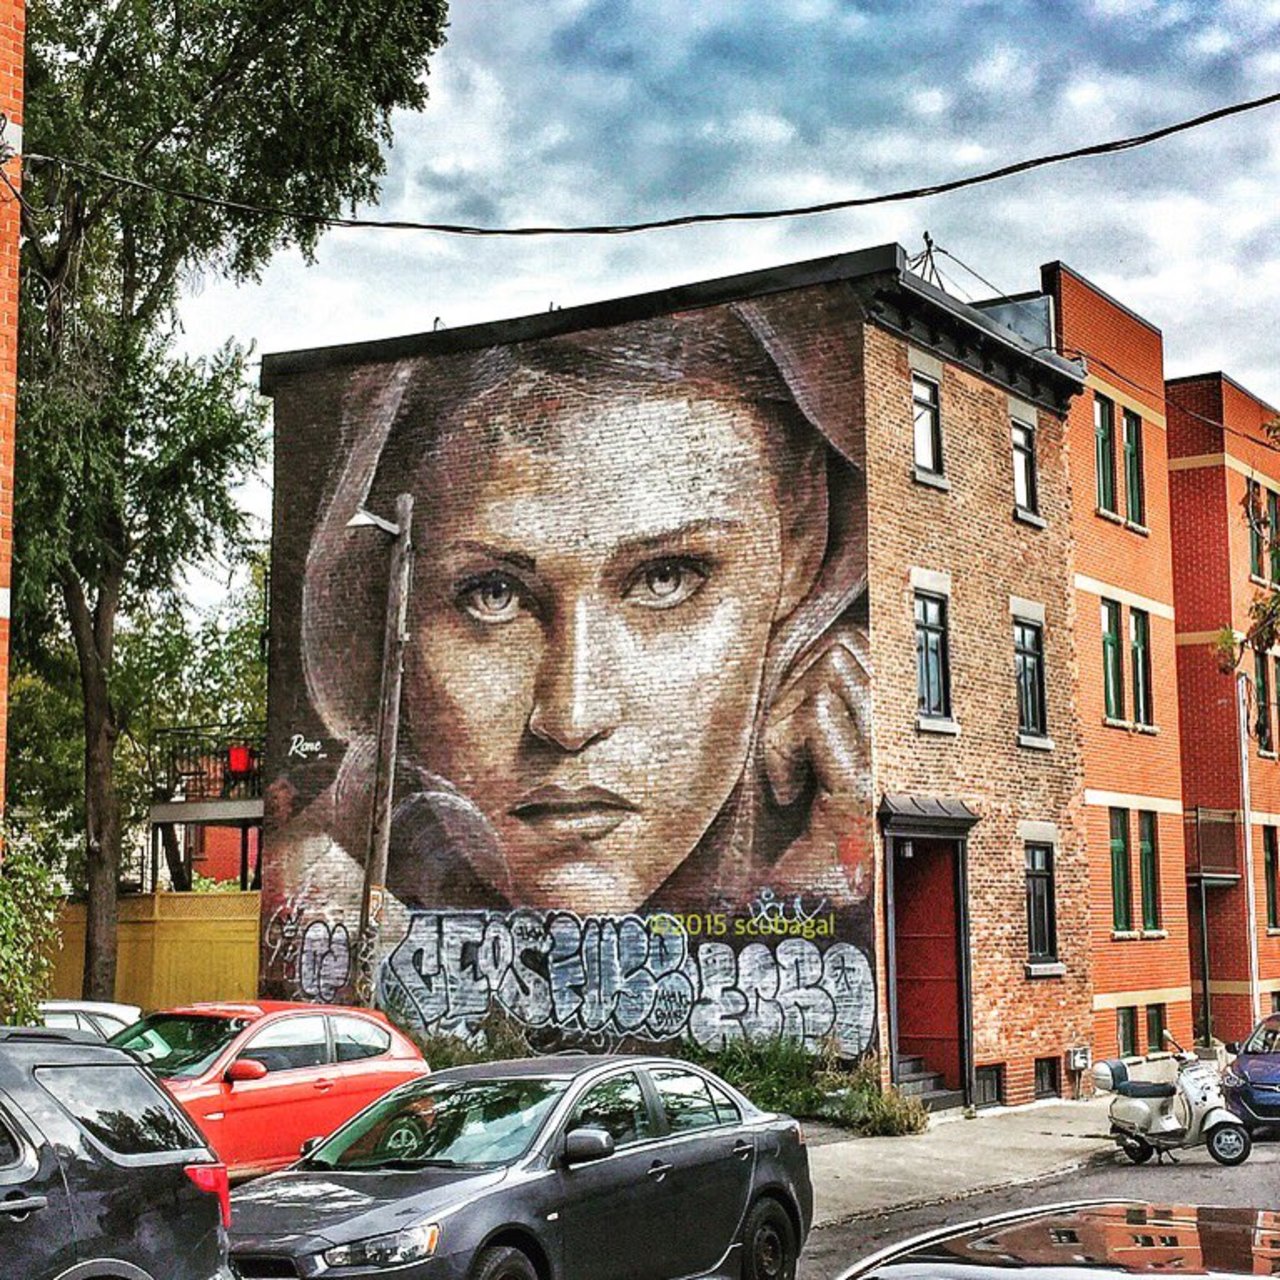 ThisScubaGal: The Walkflower | #Montreal #art #graffiti #streetart #streetphotography https://t.co/Tzvpn1r0Ea